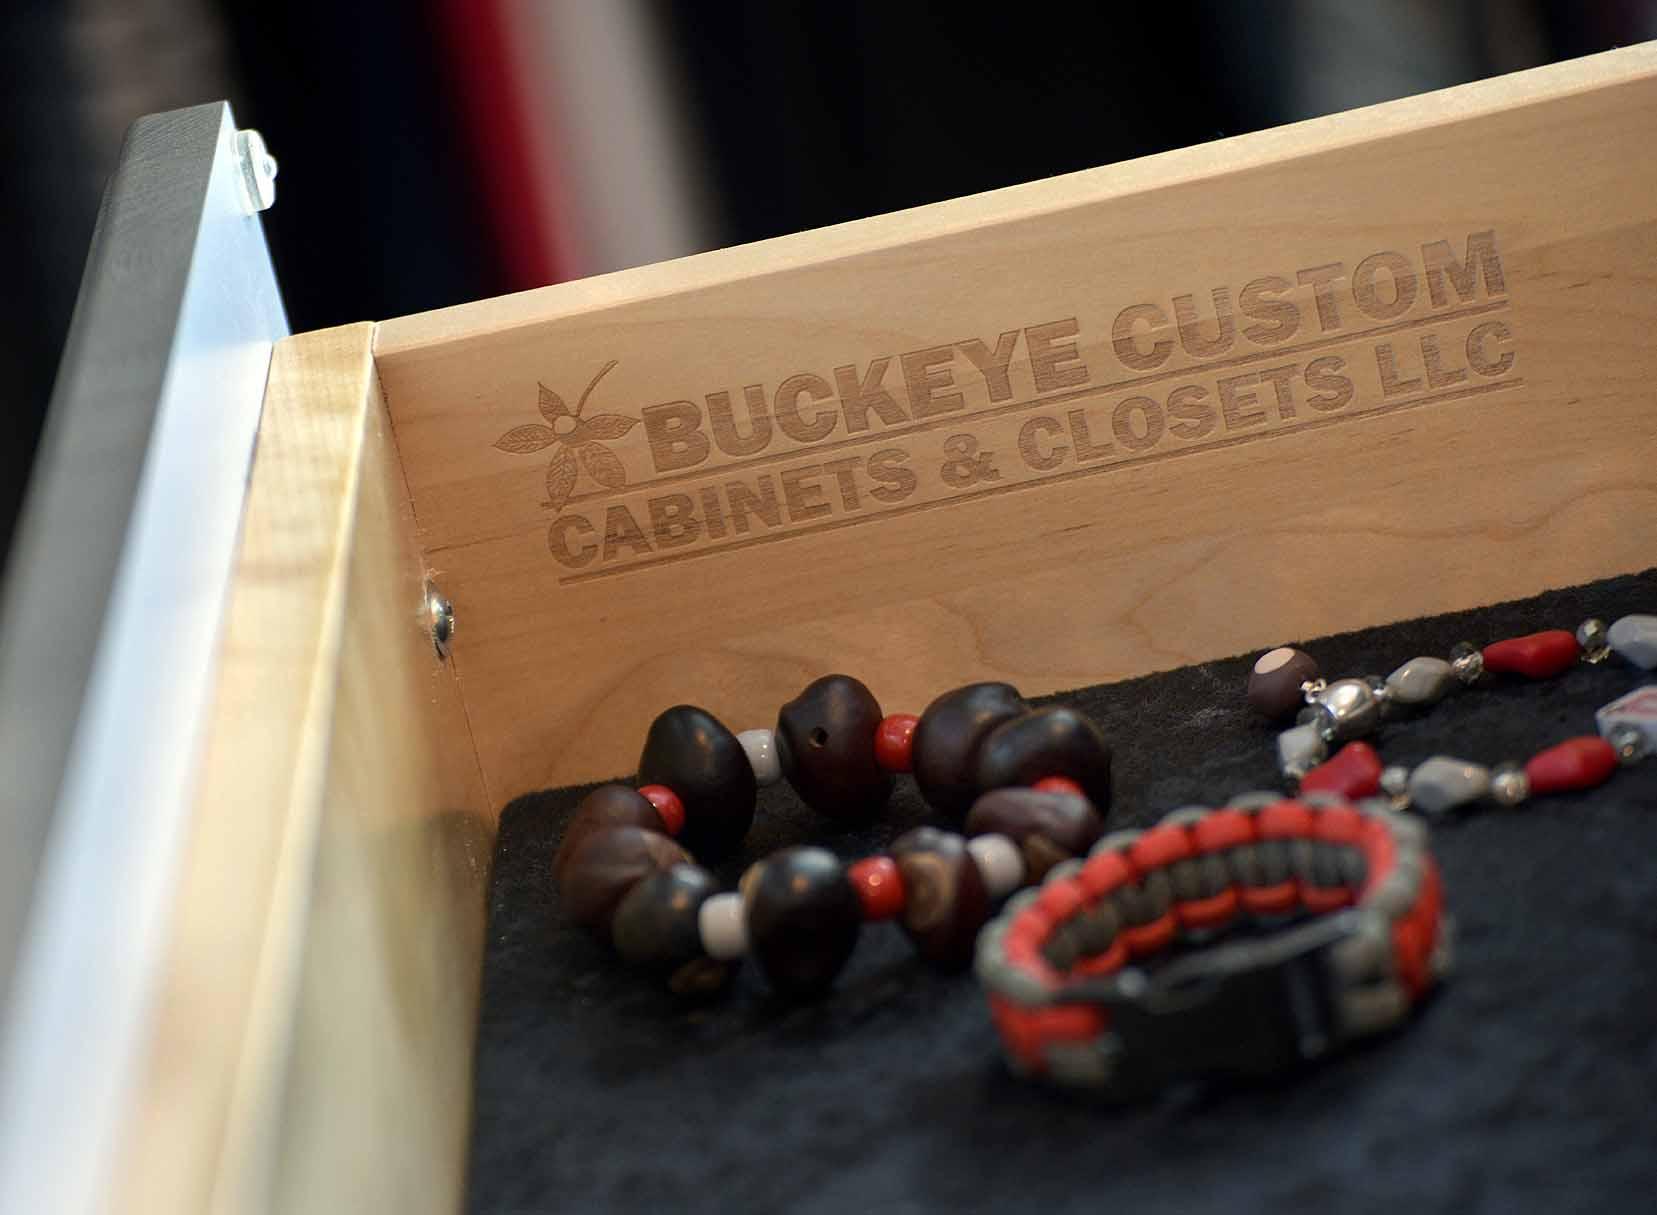 Buckeye Custom Cabinets & Closets